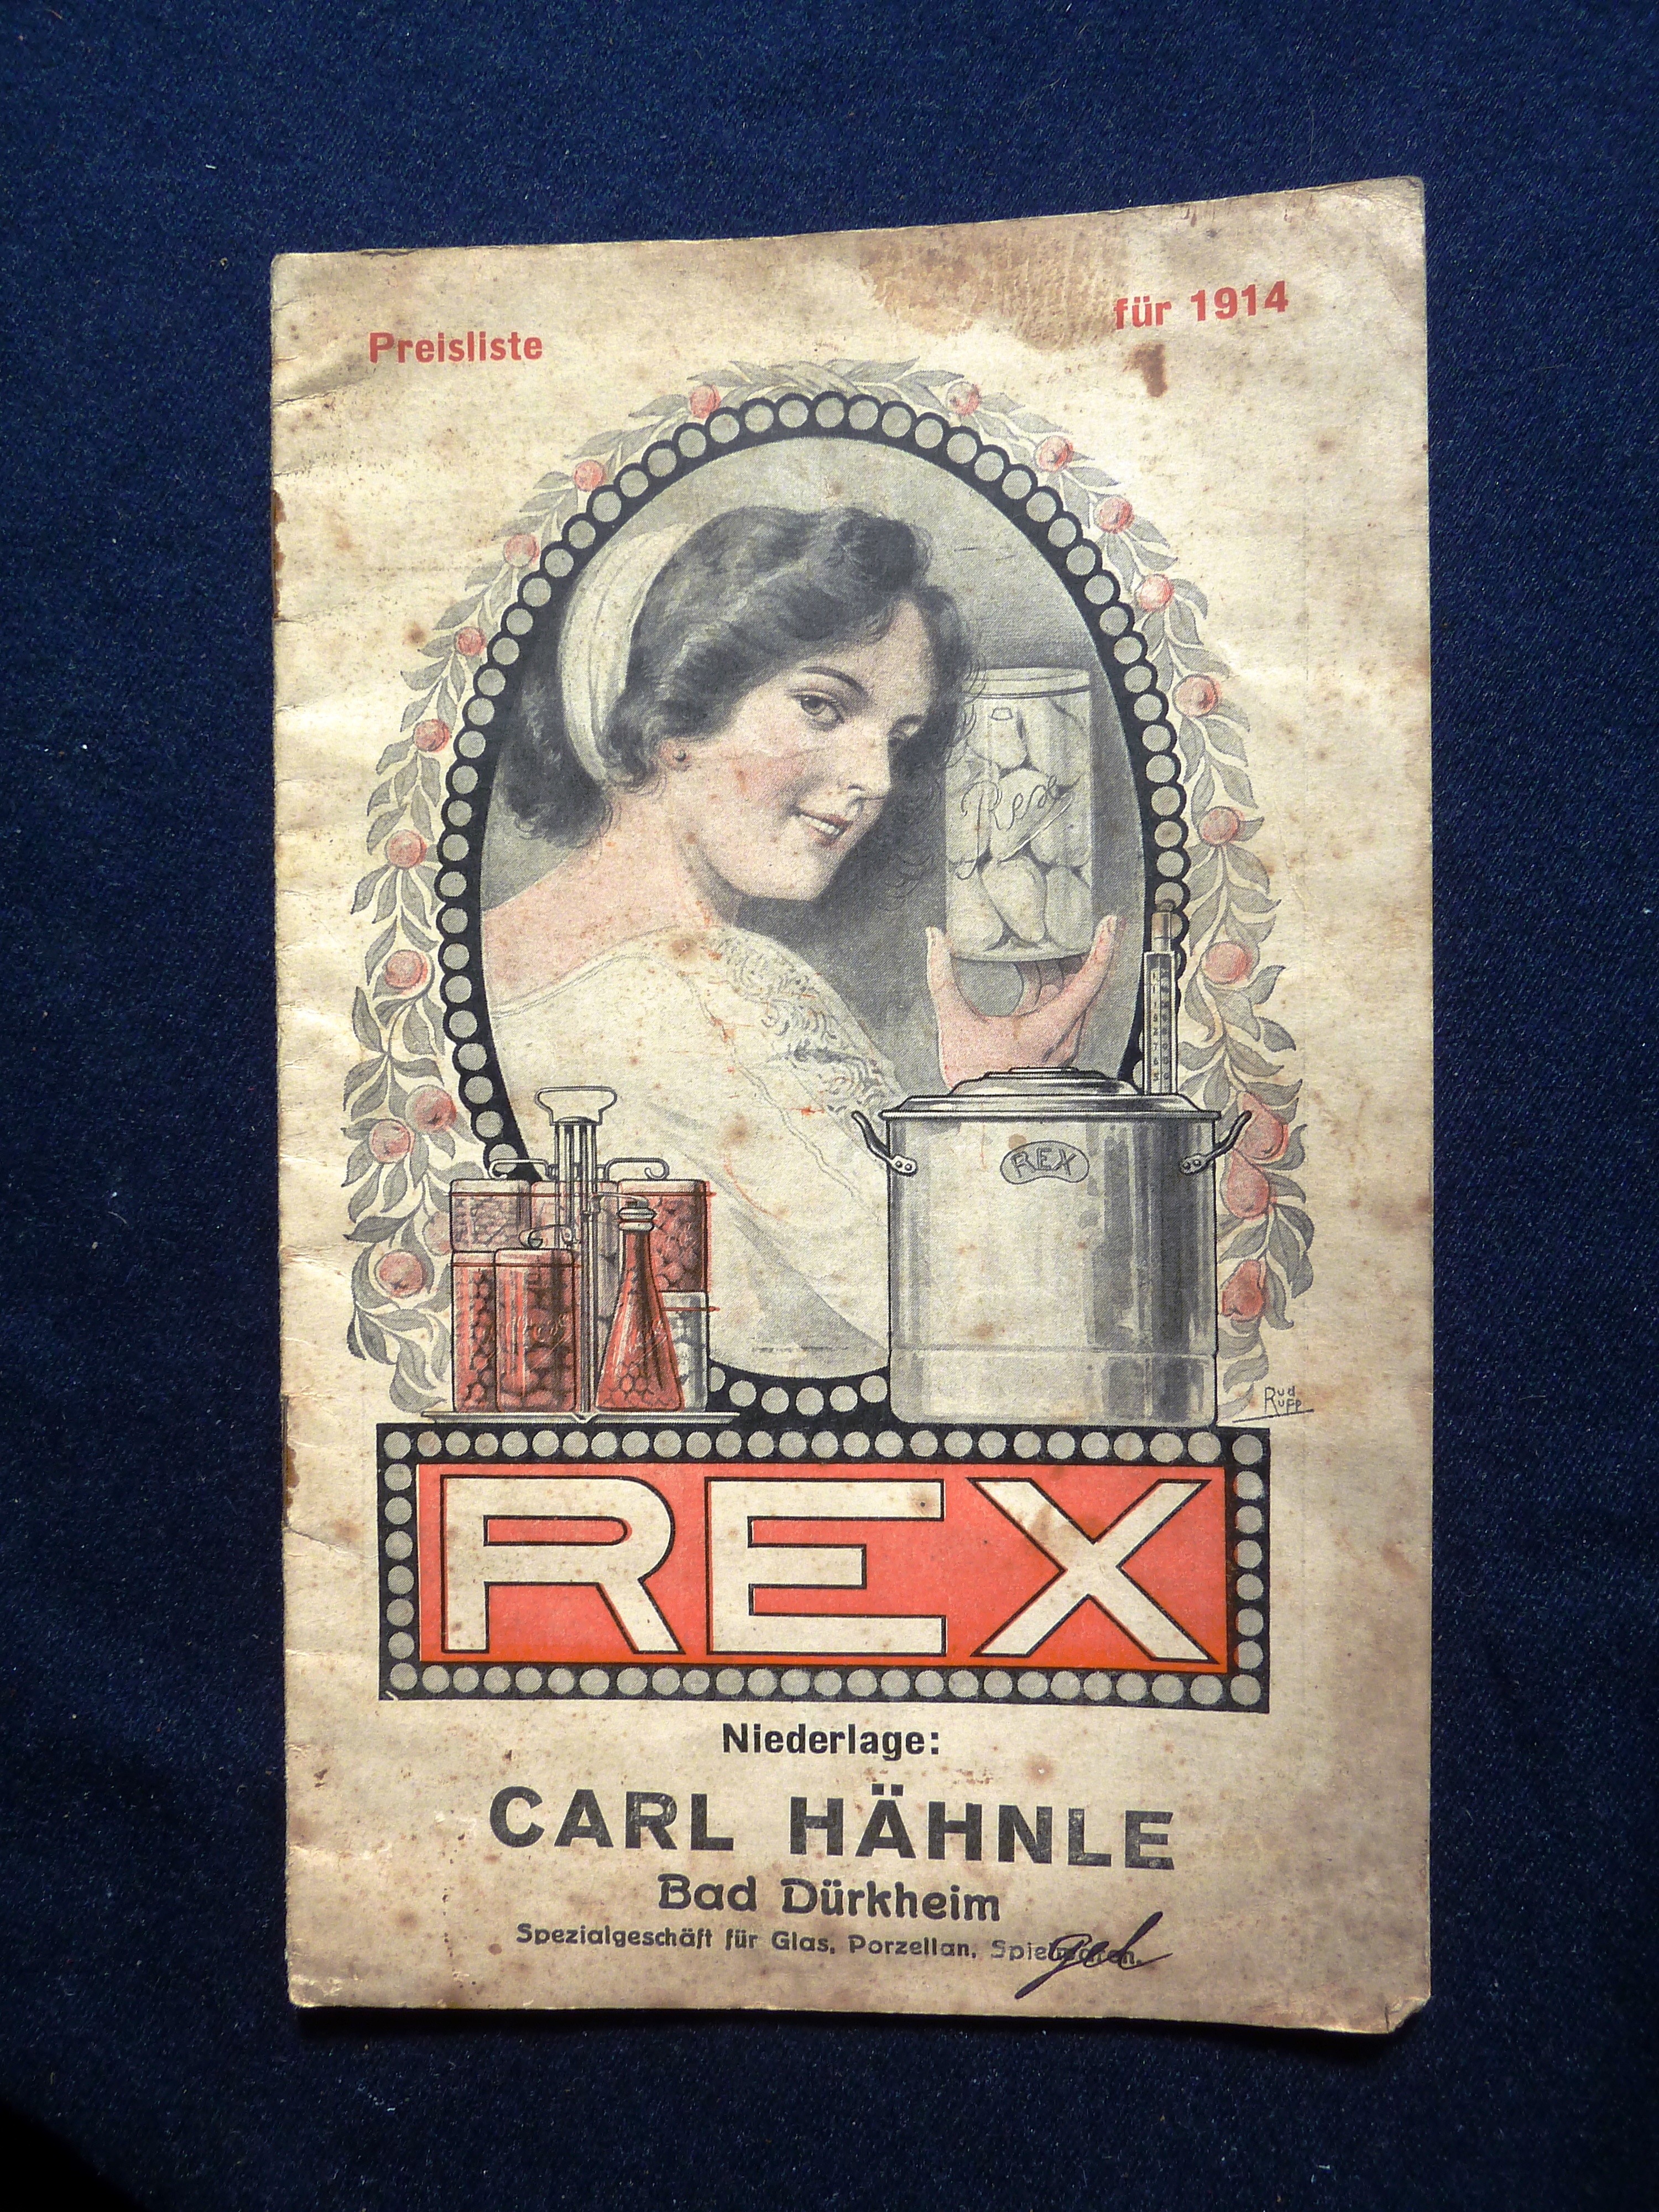 Buch, Broschüre: "REX, Preisliste für 1914"; Carl Hähnle, Bad Dürkheim, 1914 (Stadtmuseum Bad Dürkheim, Museumsgesellschaft Bad Dürkheim e.V. CC BY-NC-SA)